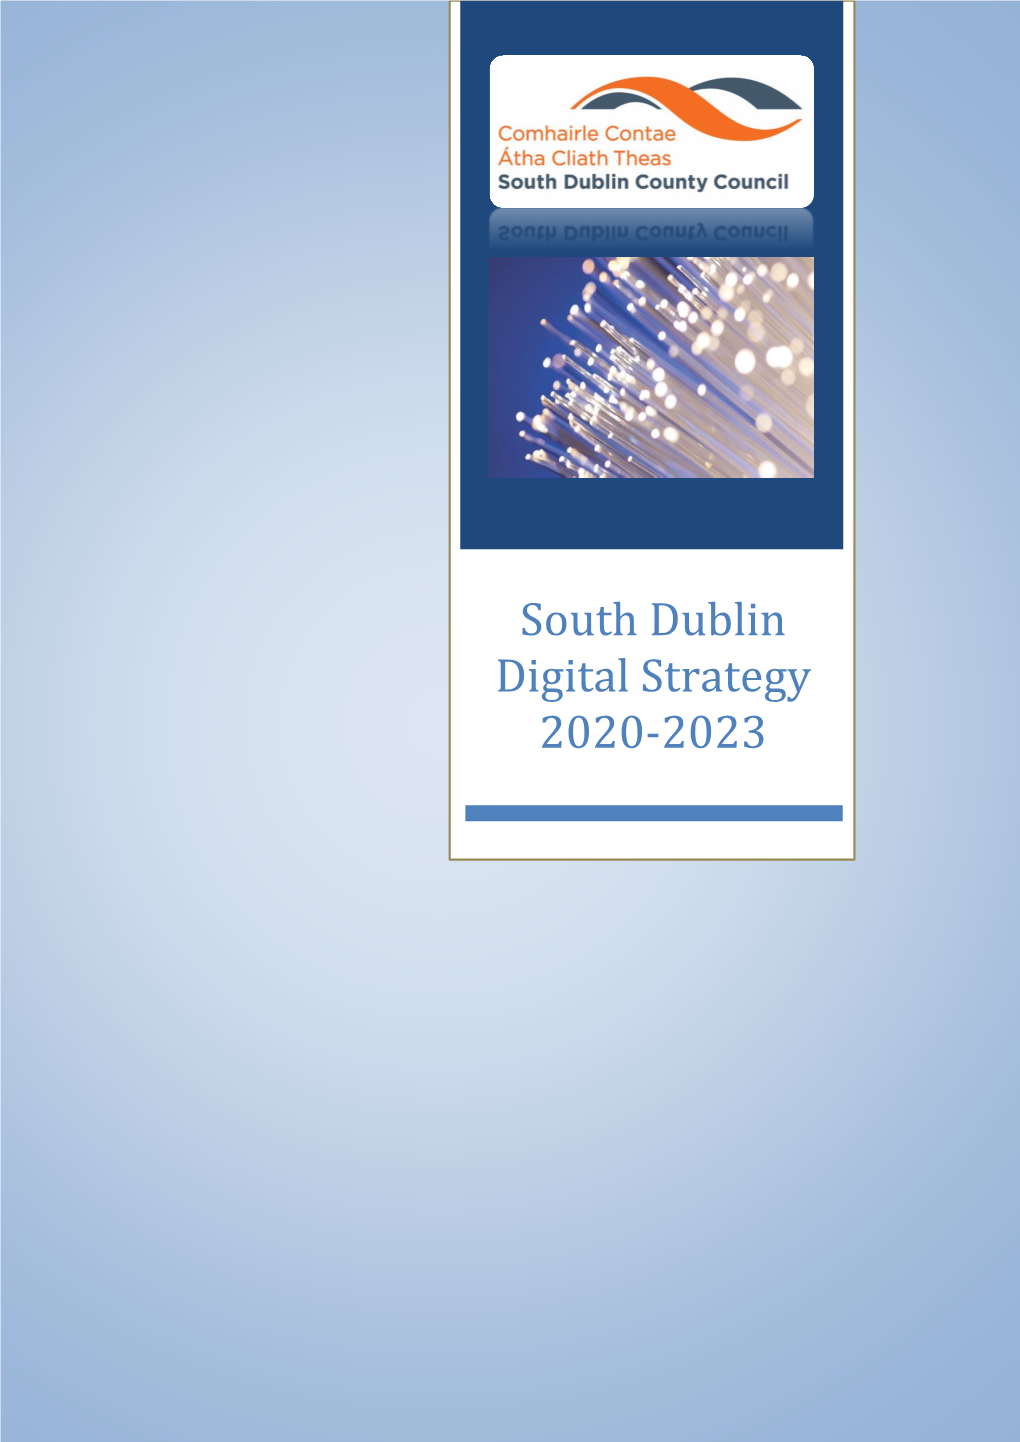 South Dublin Digital Strategy 2020-2023